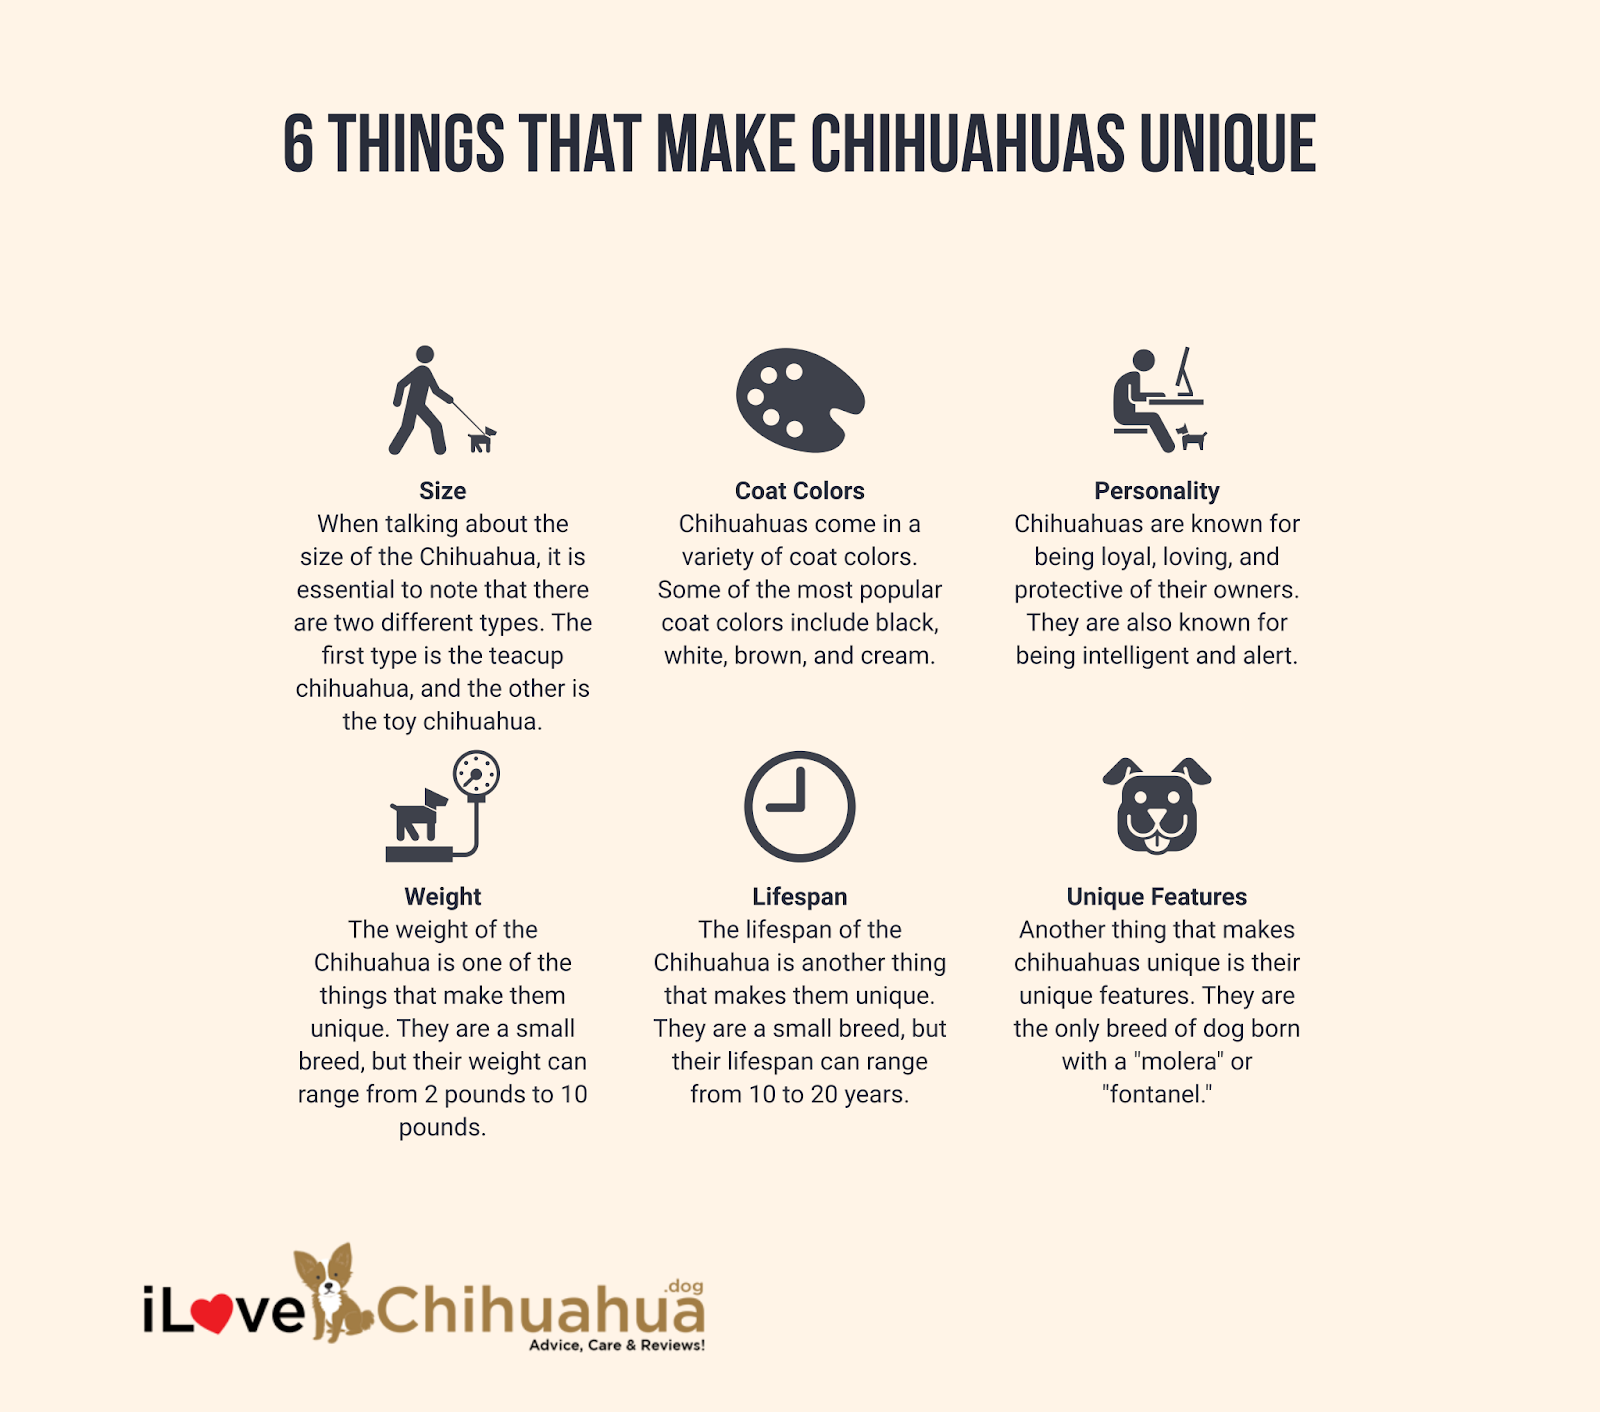 What Makes Chihuahuas Unique?